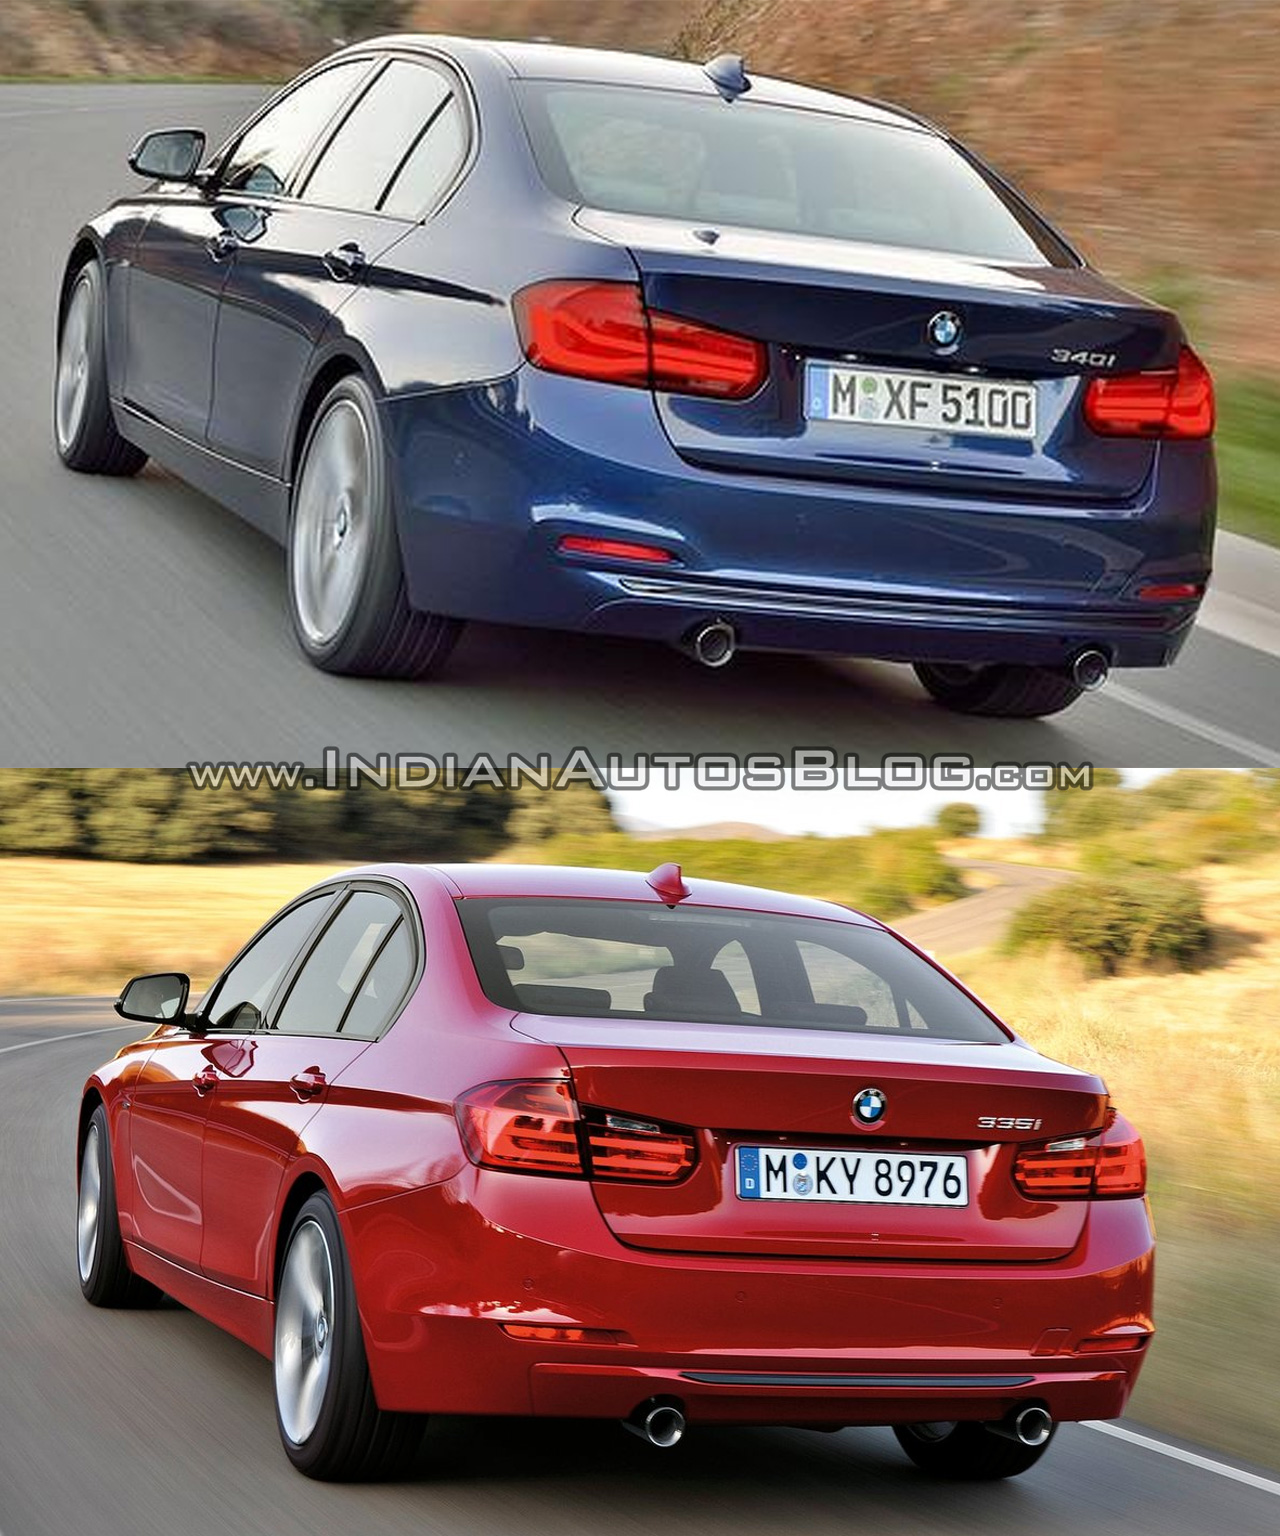 2015 BMW 3 Series (facelift) vs older model - Old vs New